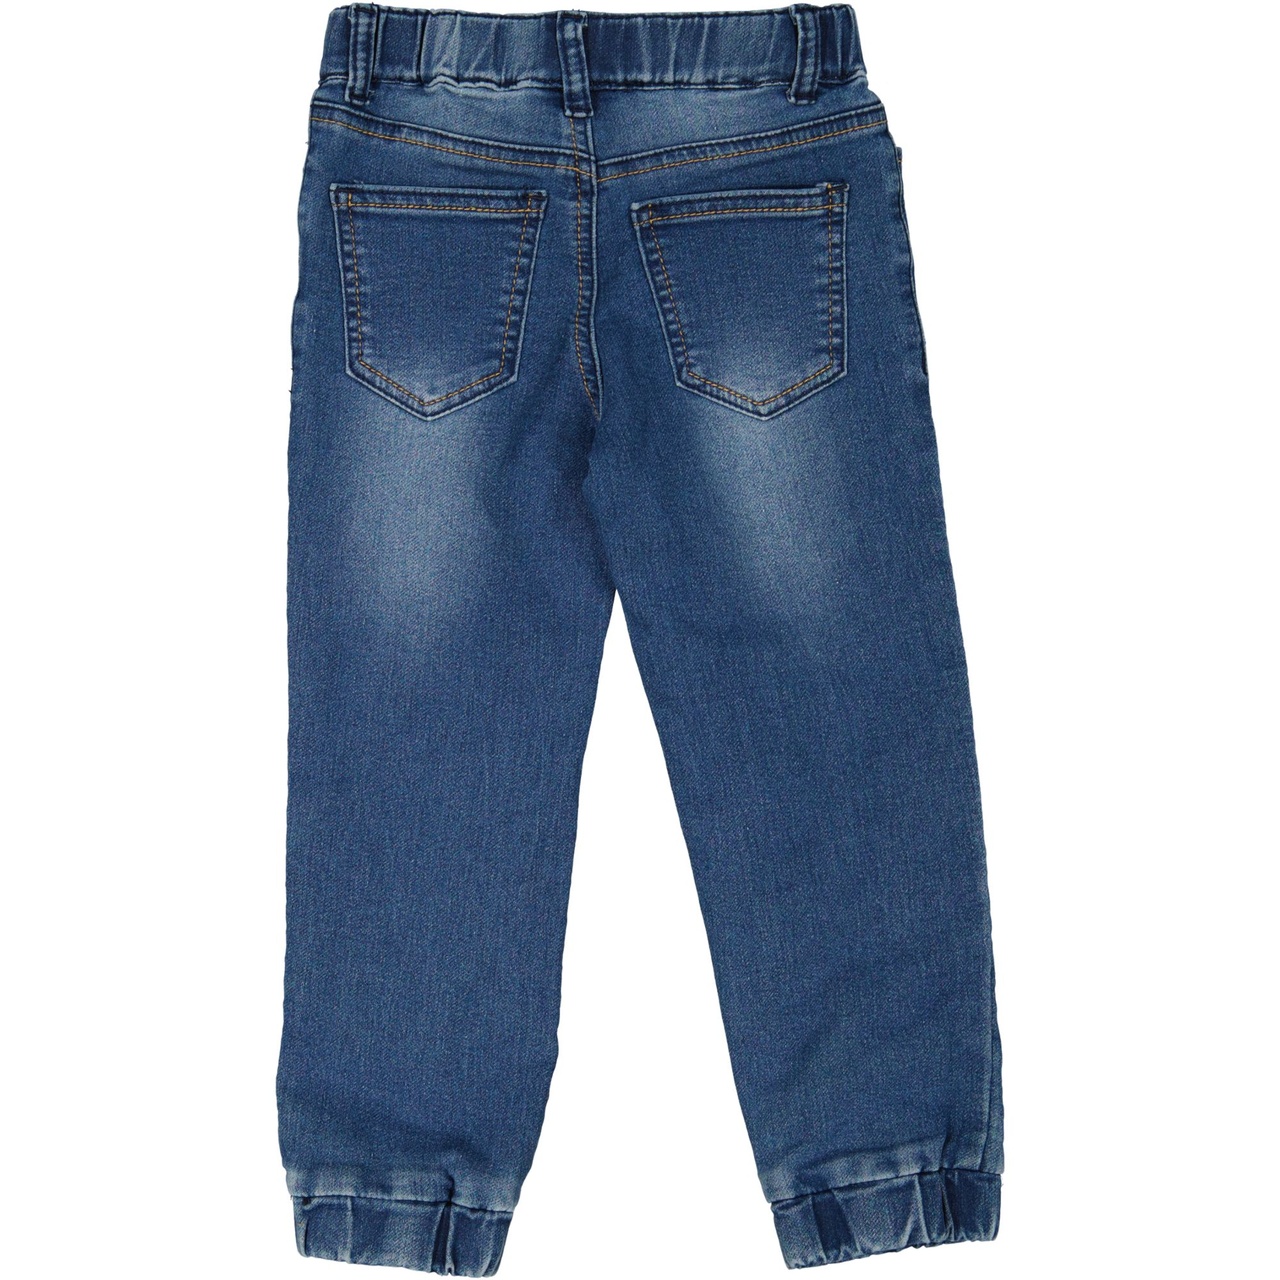 Unisex soft jeans Denim blue wash 86/92